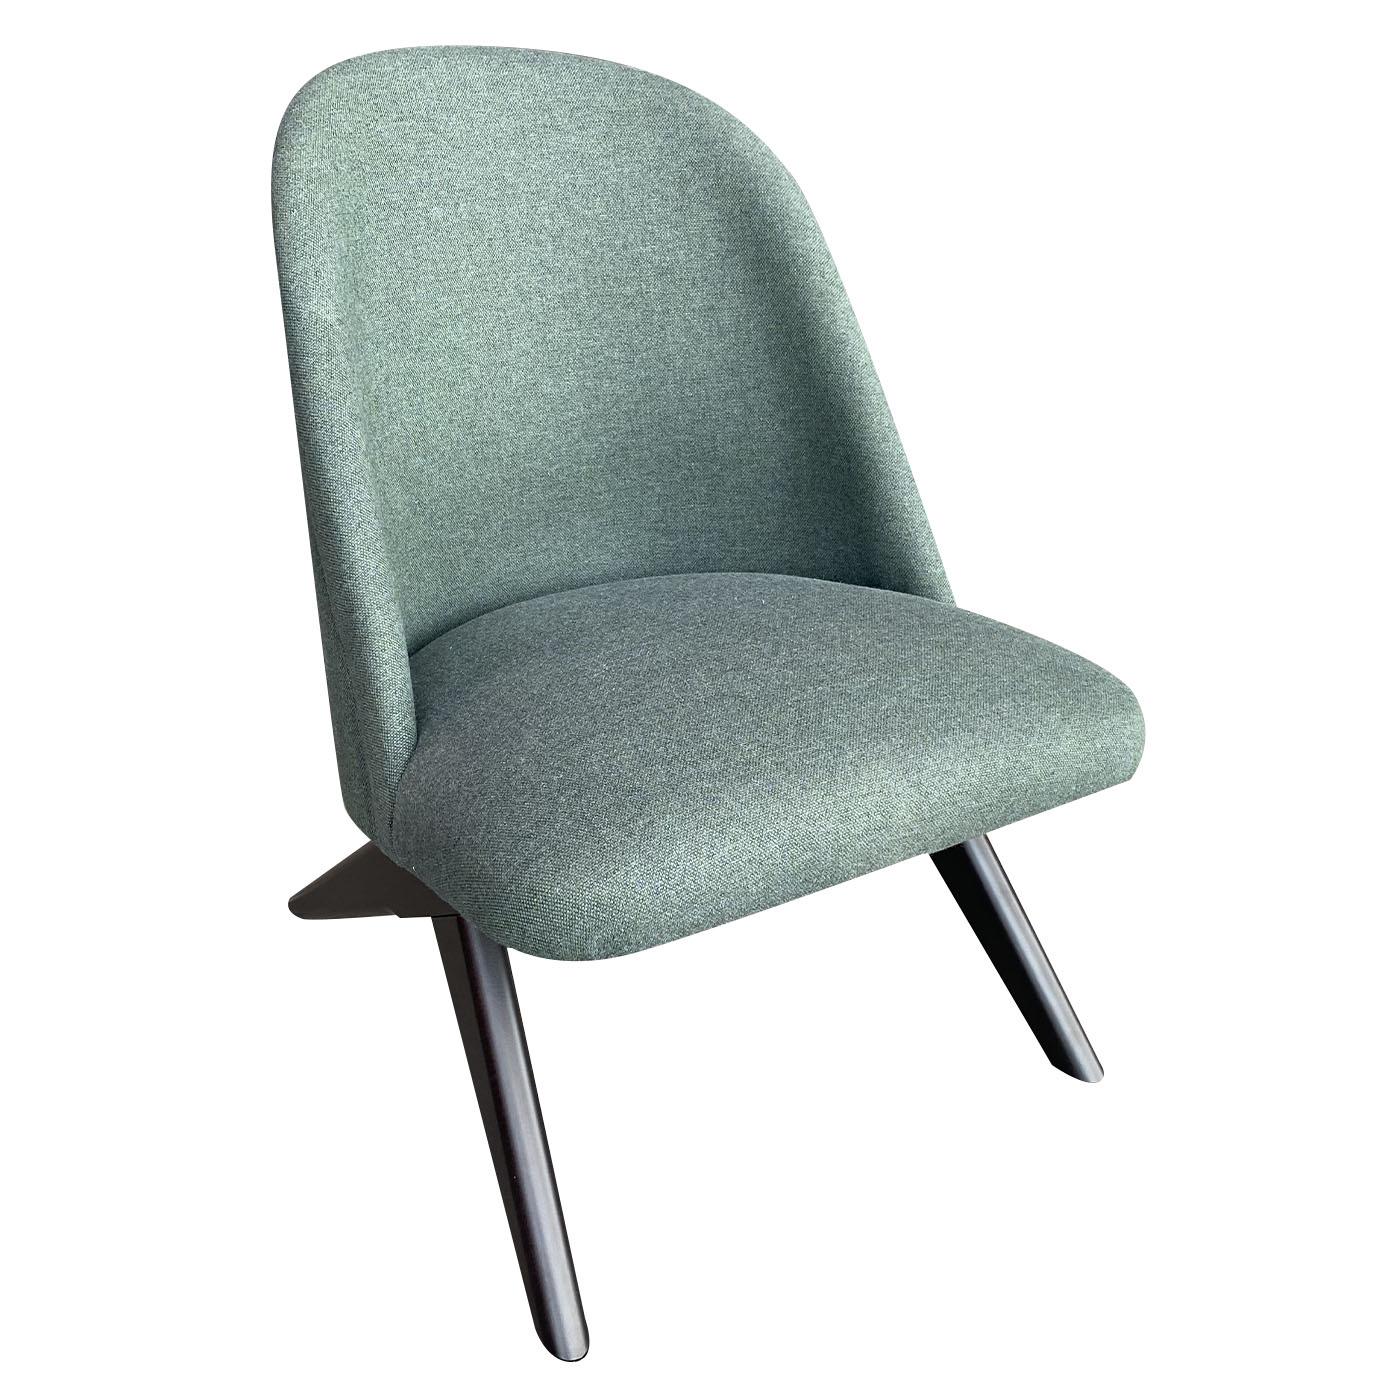 Italian Macao Greenford Lounge Chair For Sale